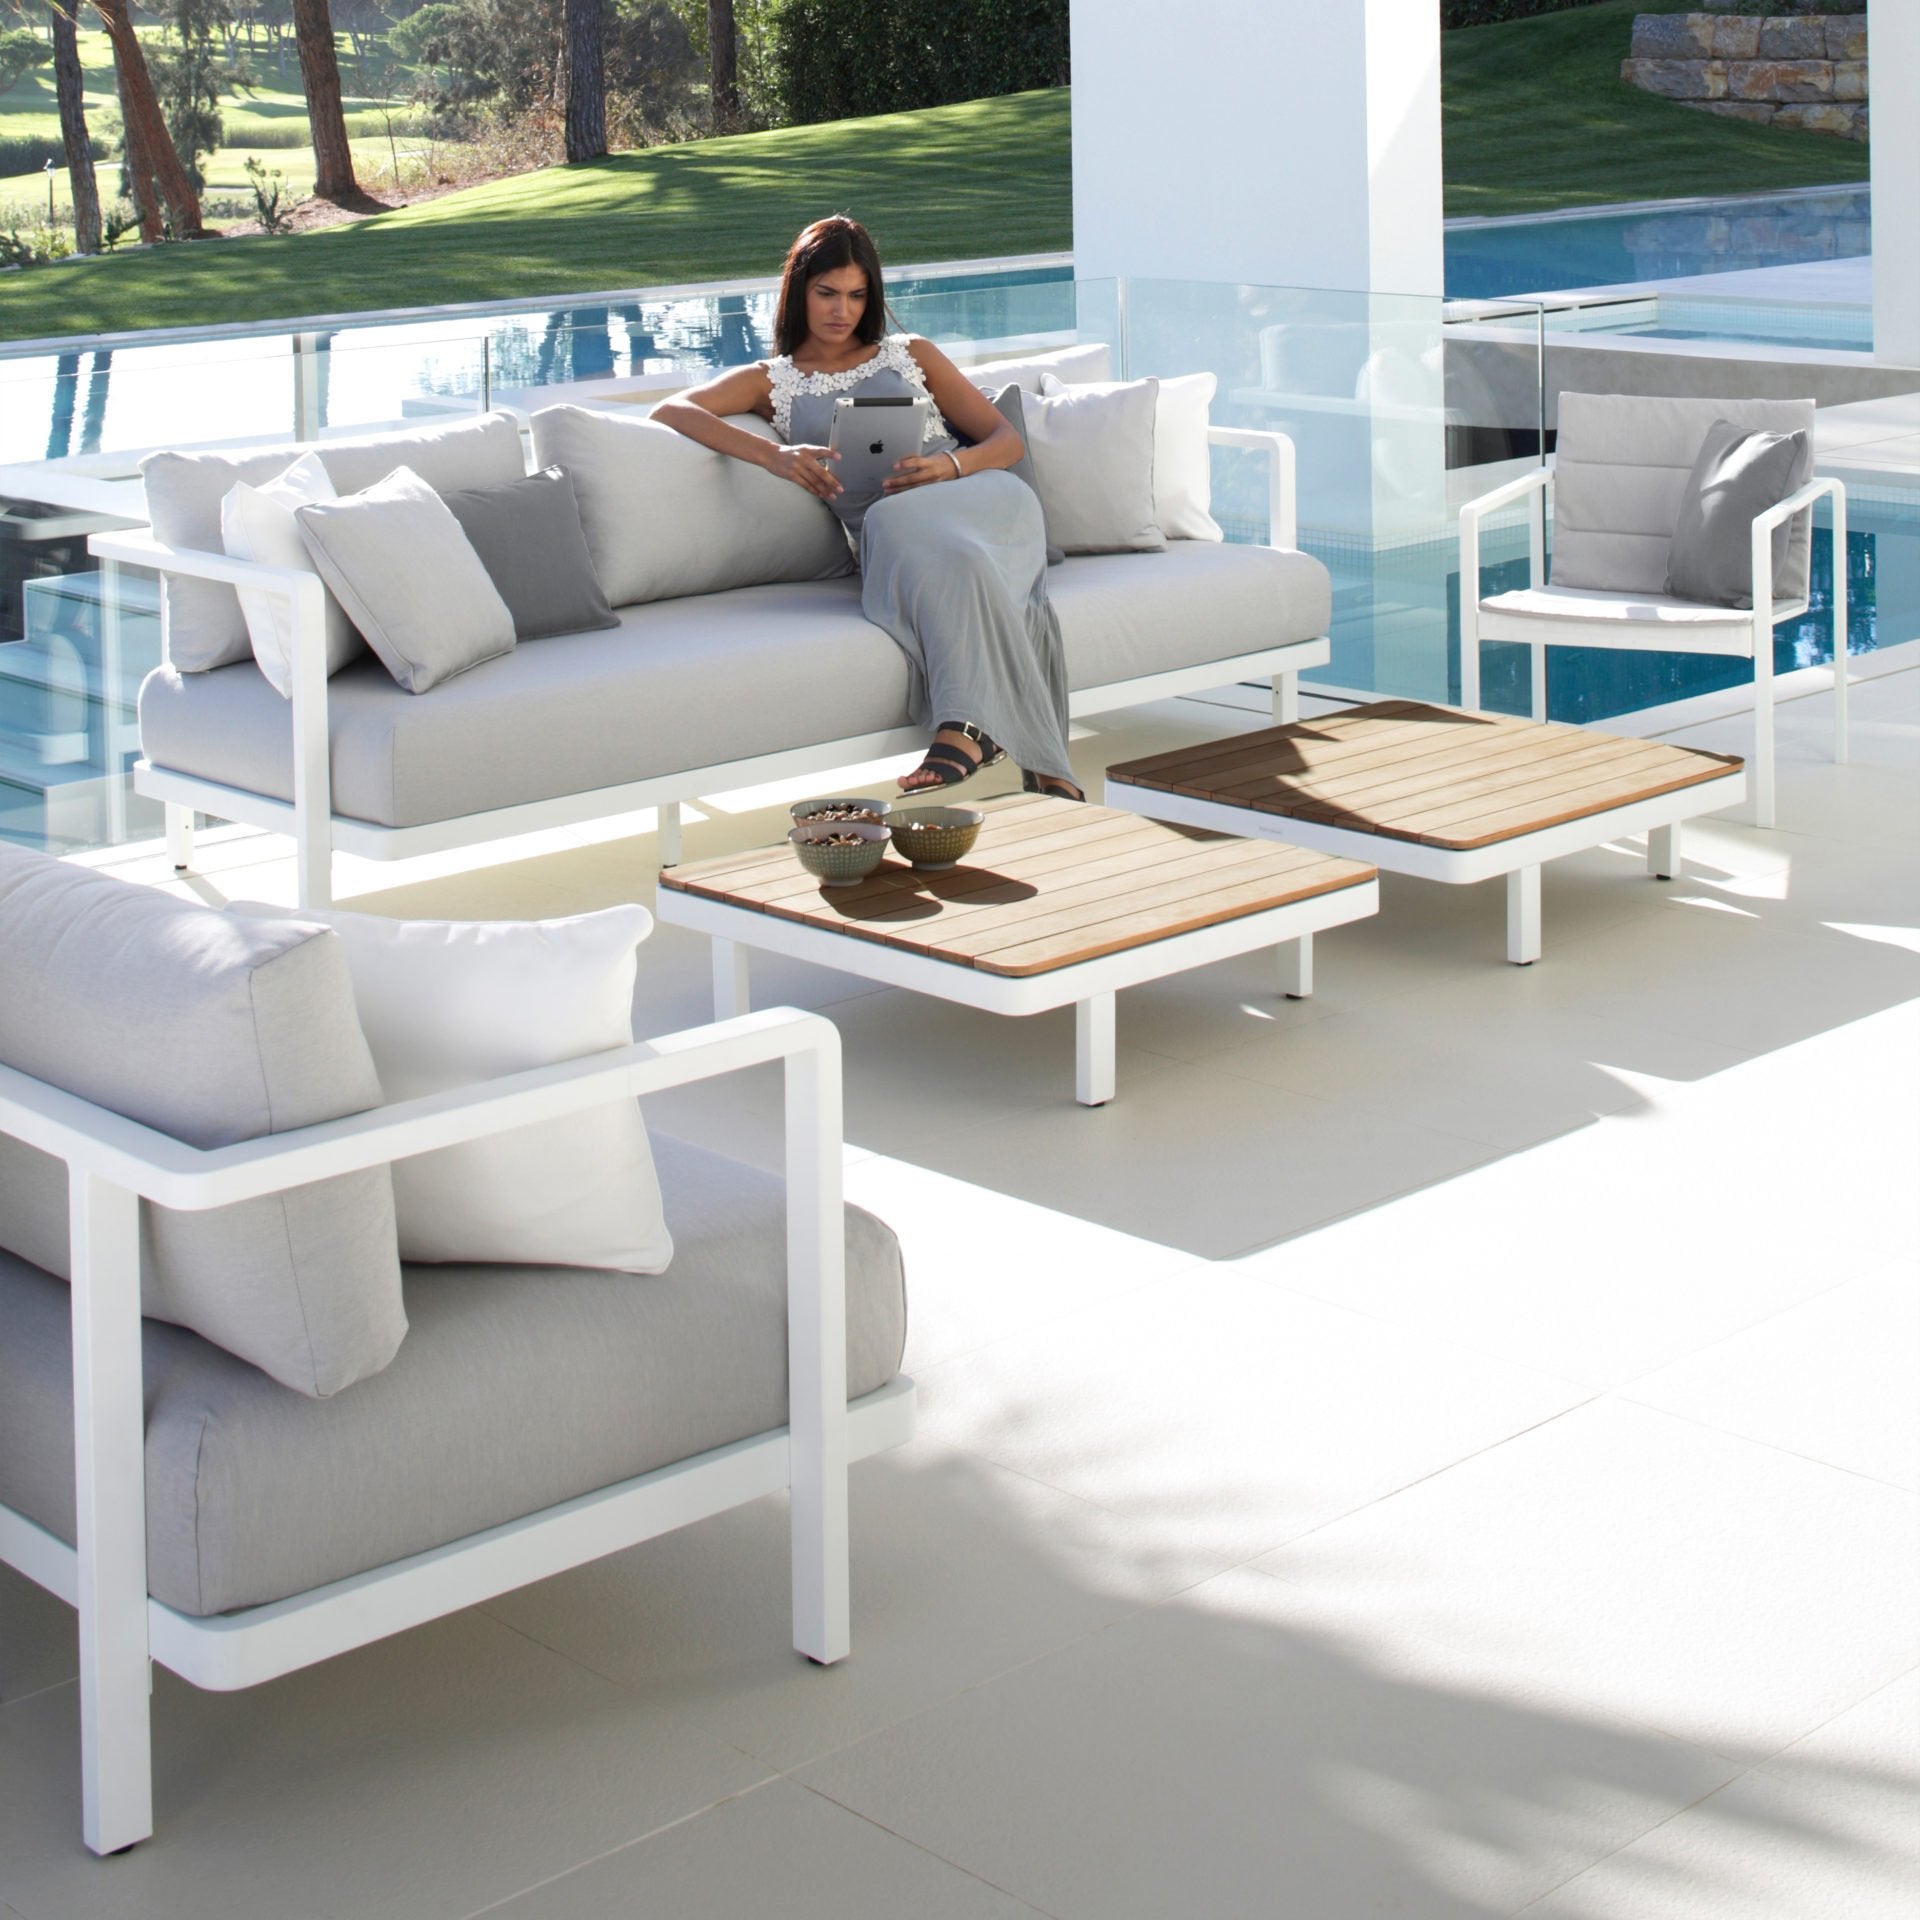 Alura Lounge 160 Ltl Table 160x80x23cm White Ceramic Tabletop Ceppo Dolomitica